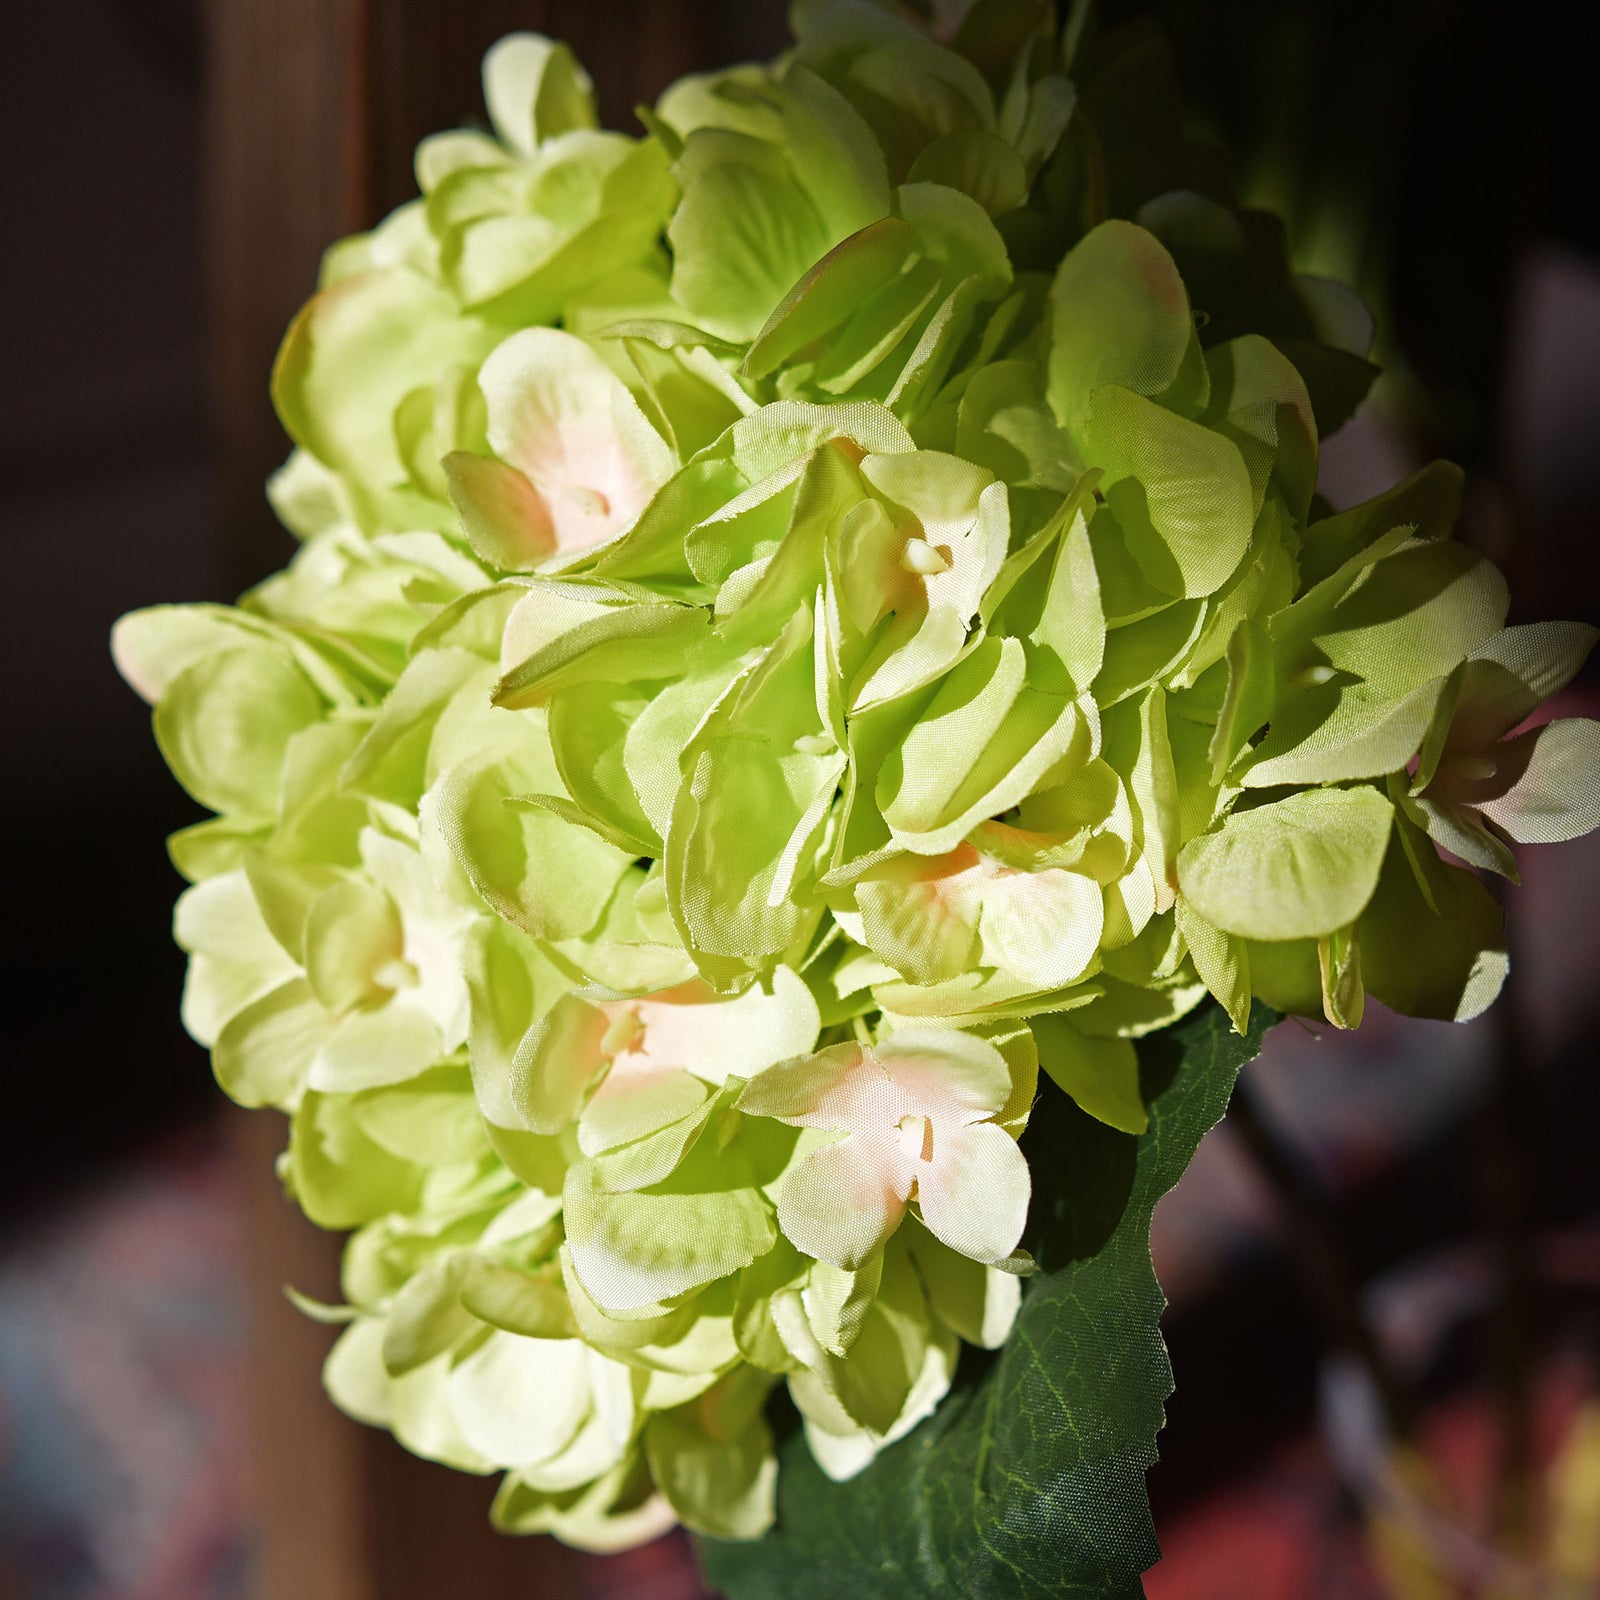 5 Stems Spring Green Artificial Silk Hydrangea Flowers